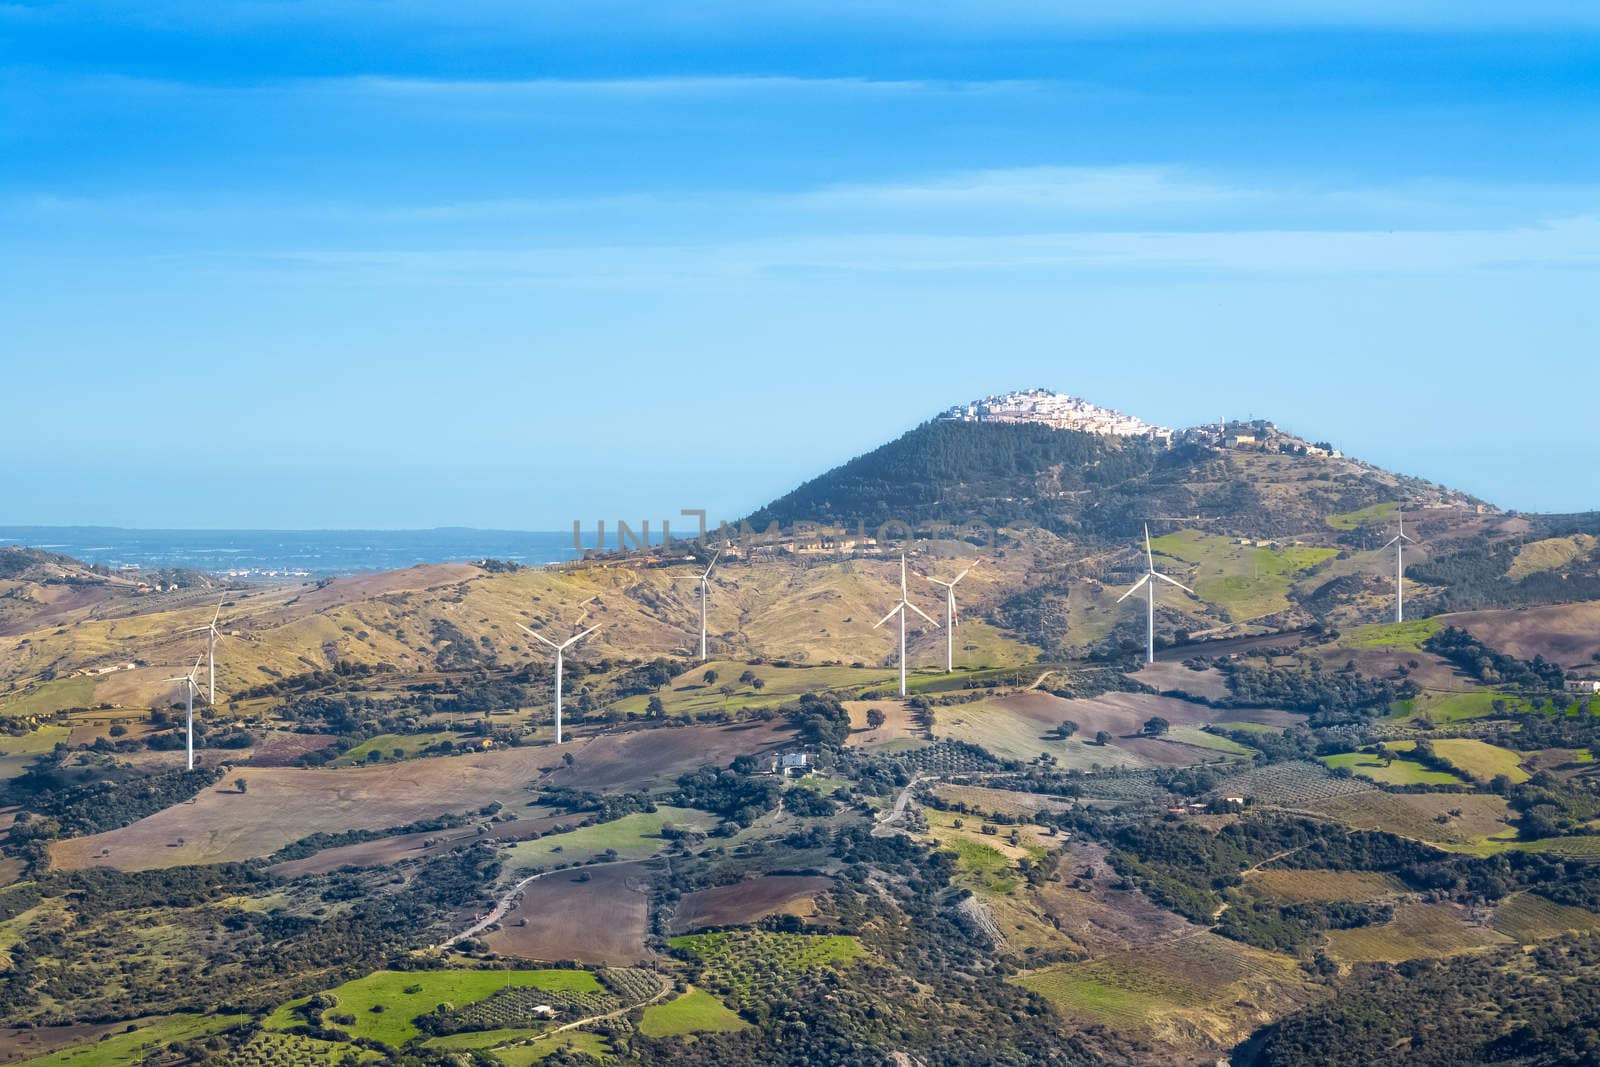 wind turbine renewable energy source on landscape by donfiore